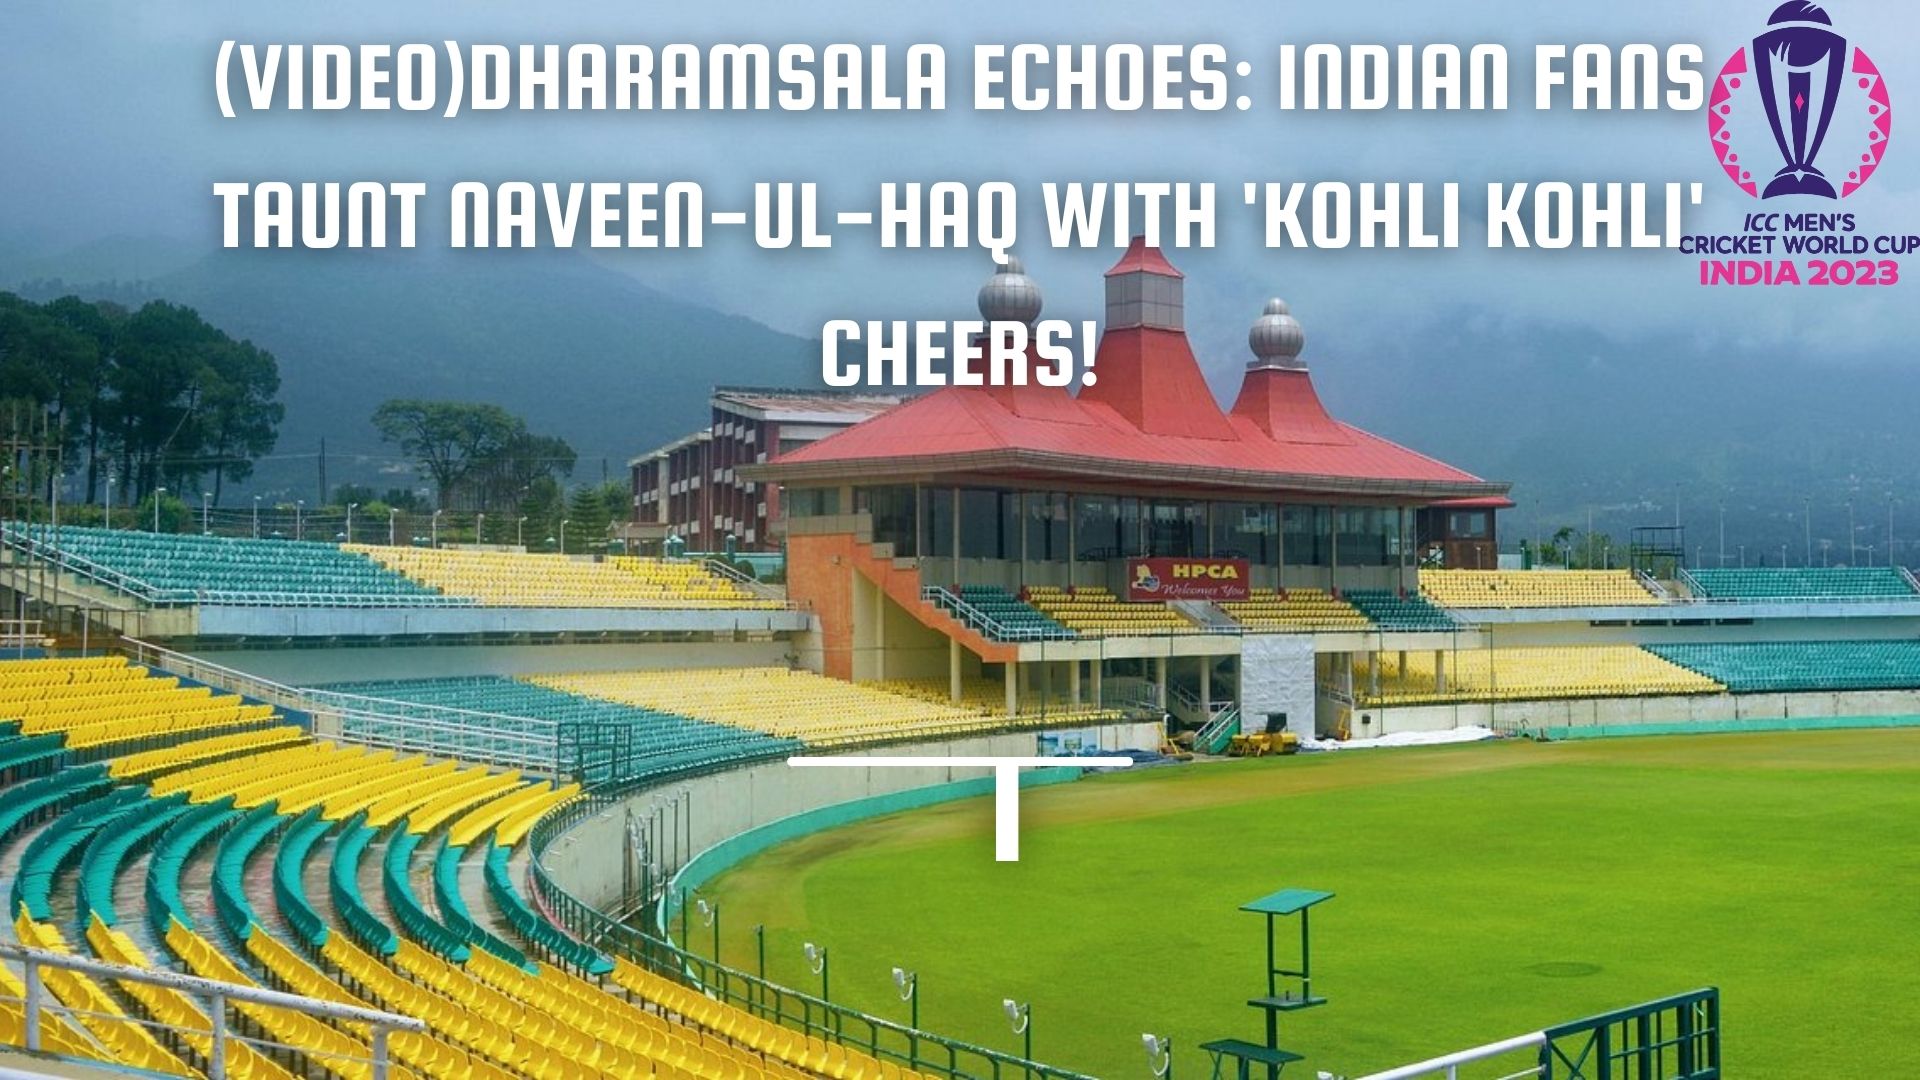 (Video)Dharamsala Echoes: Indian Fans Taunt Naveen-ul-Haq with 'Kohli Kohli' Cheers!